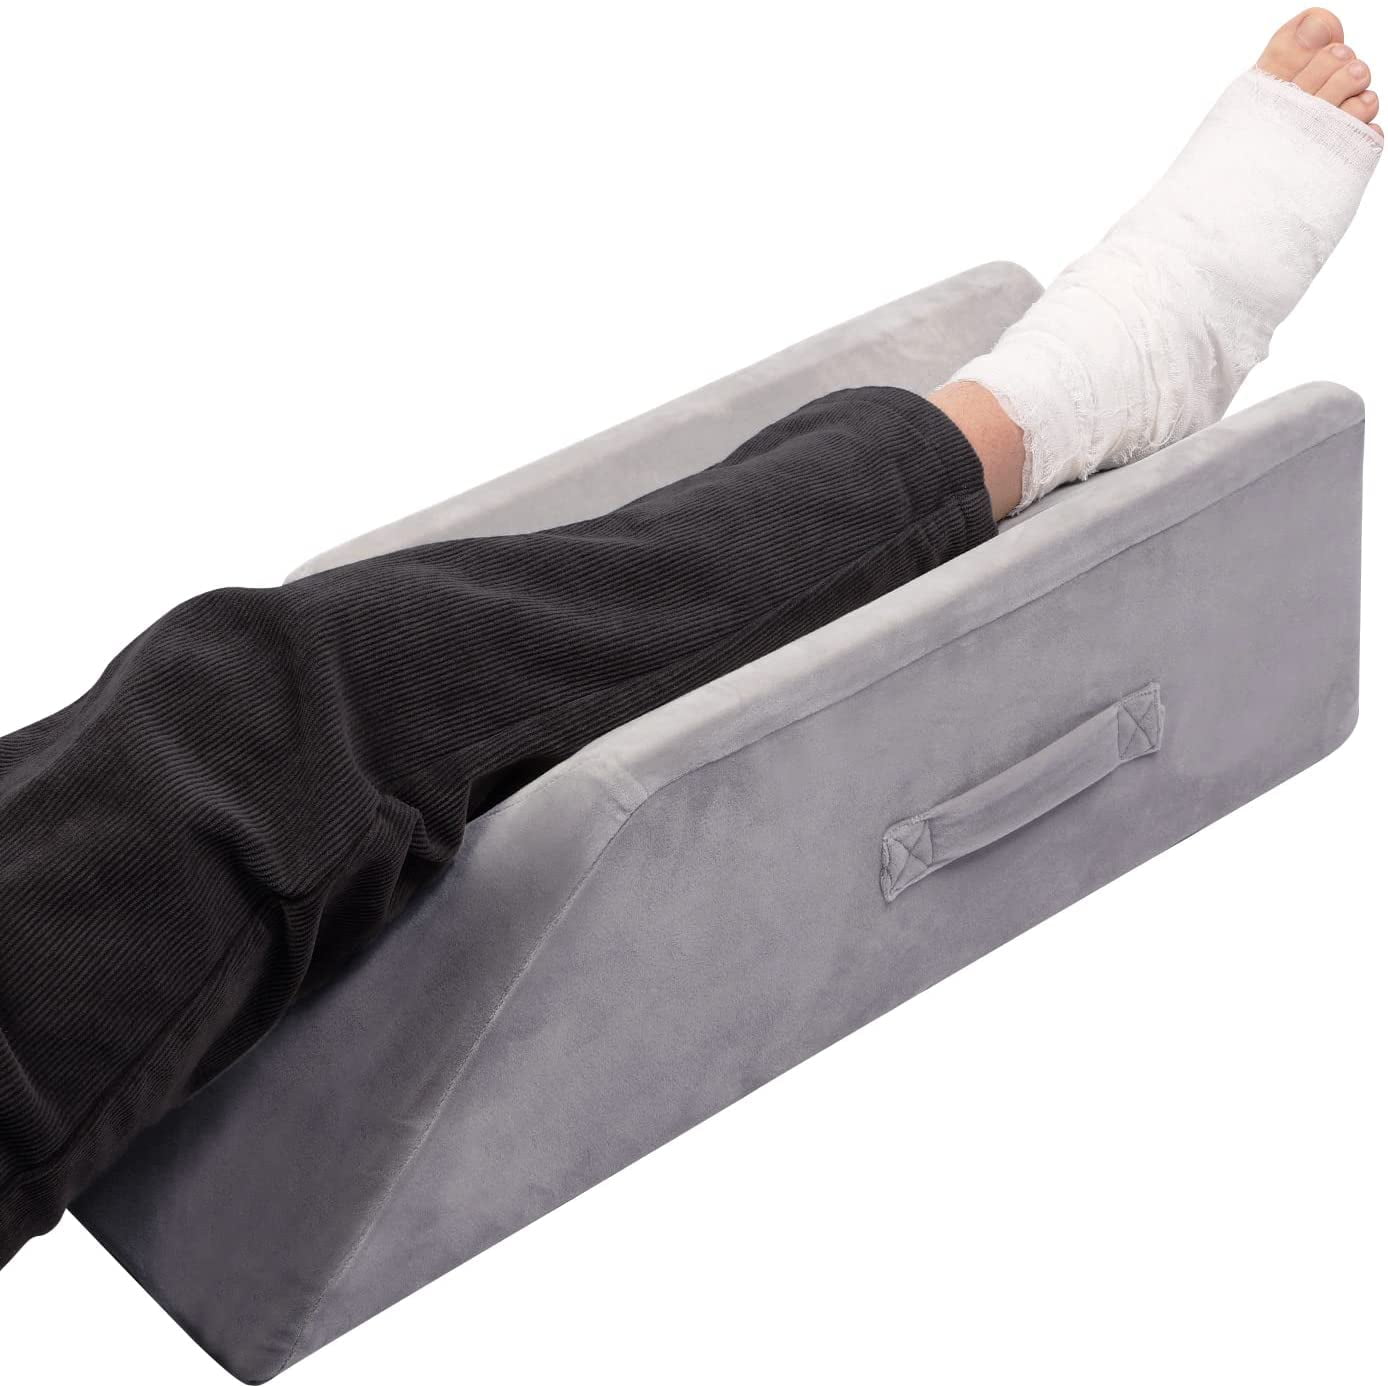 Double Leg Elevation Pillow Post Surgery Leg Pillow | Ankle Knee Surgery –  Memory Foam Leg Rest Support Pillow for Injuries, Leg Pain, Hip, Knee Pain